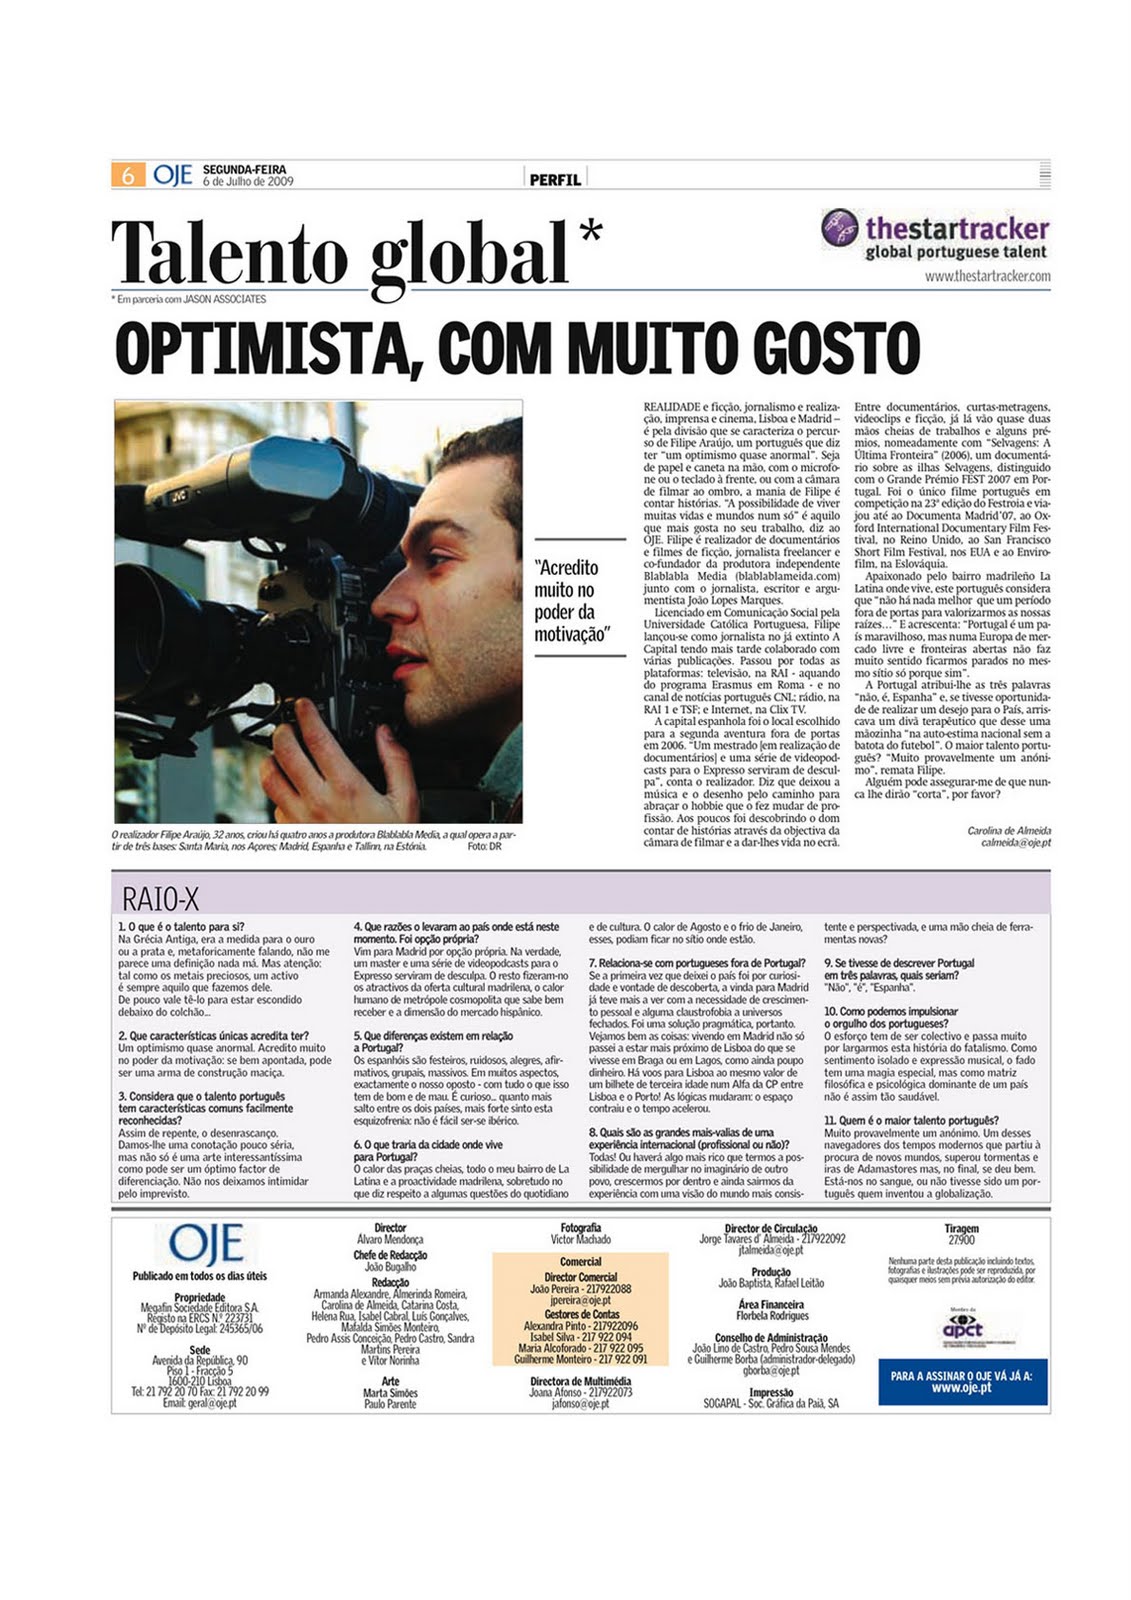 Oje - newspaper interview (Portuguese)